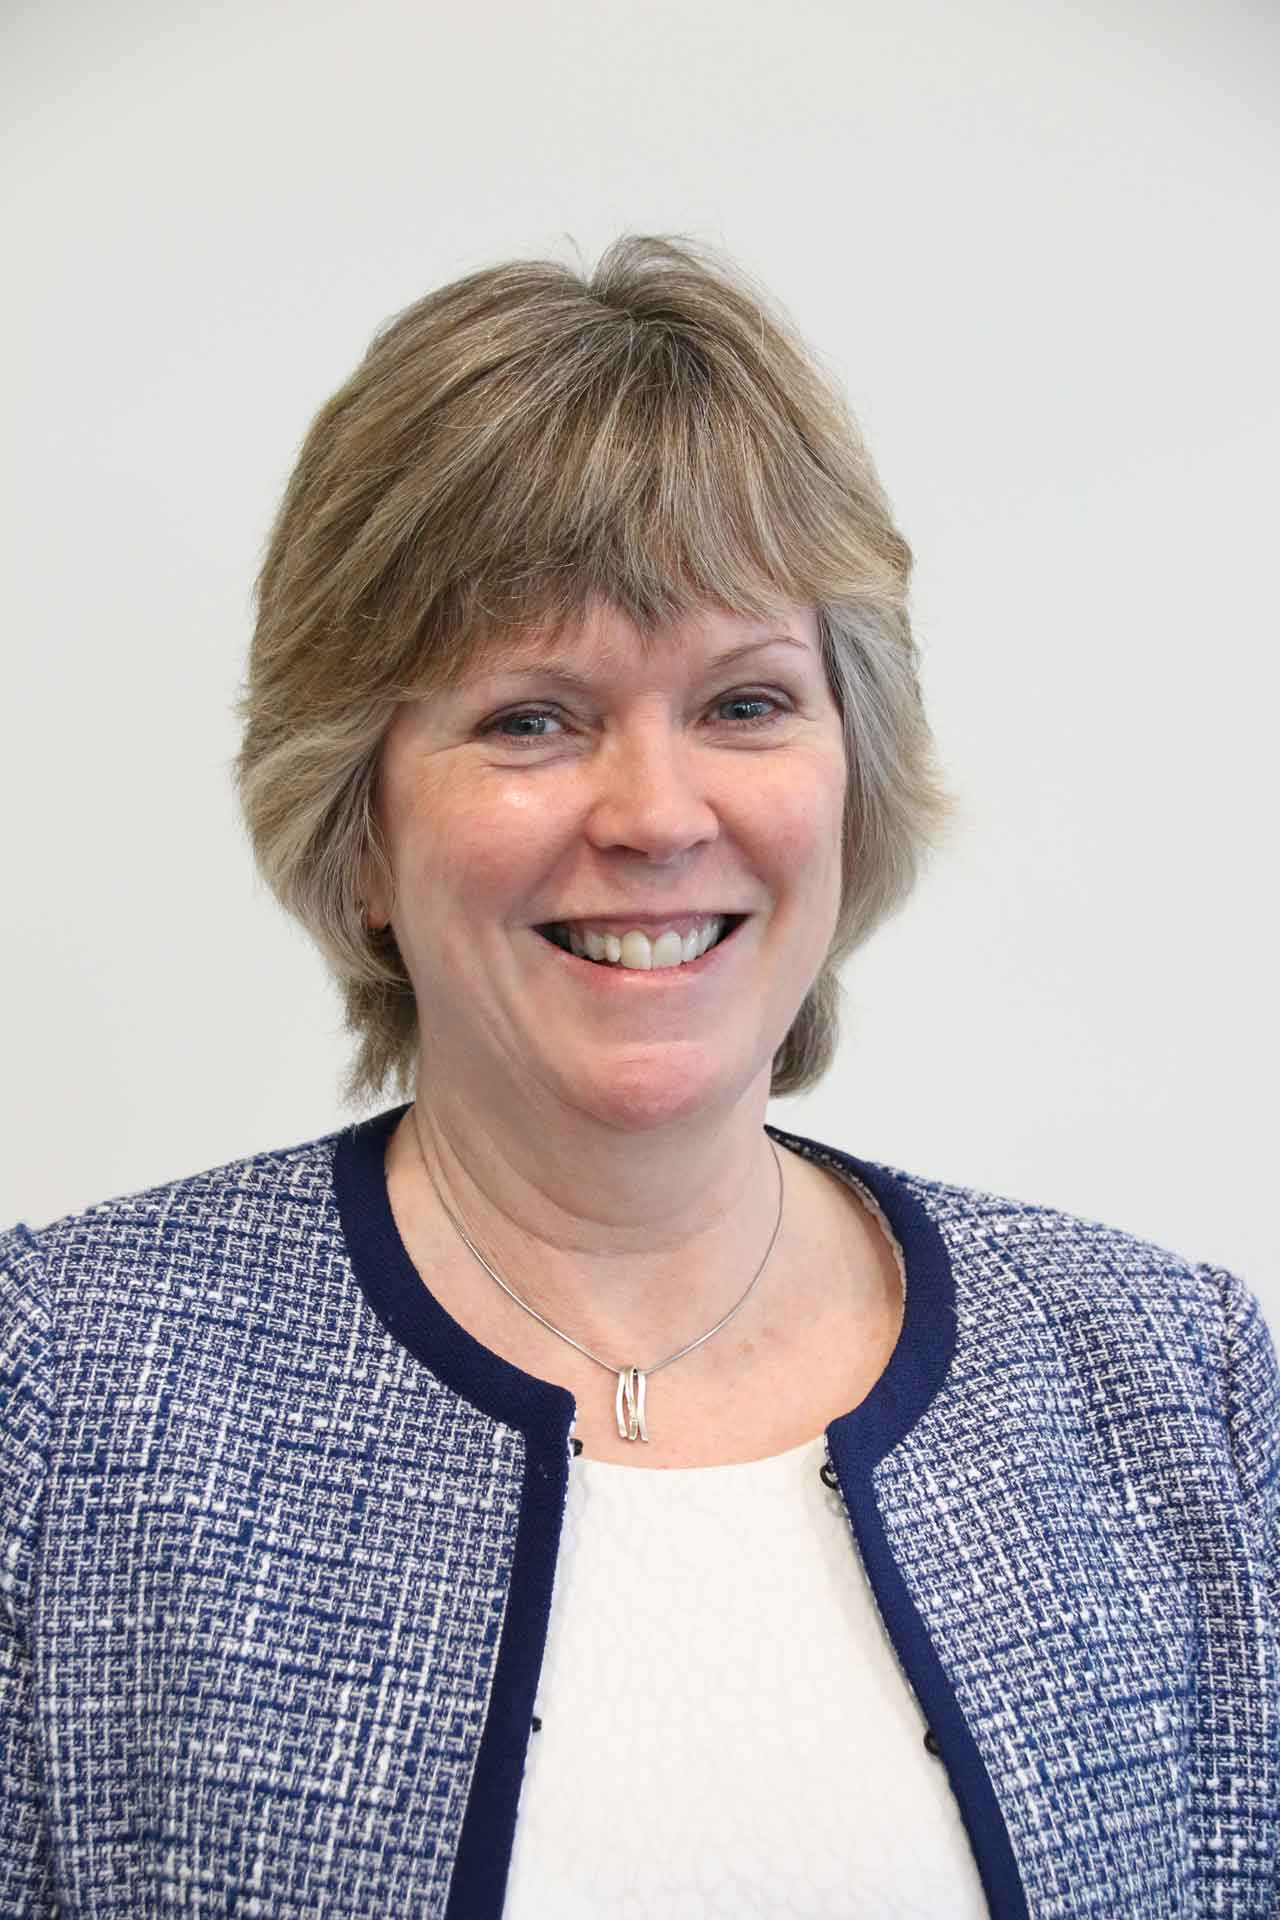 Jane Tirard Trustee Board member at Pirbright